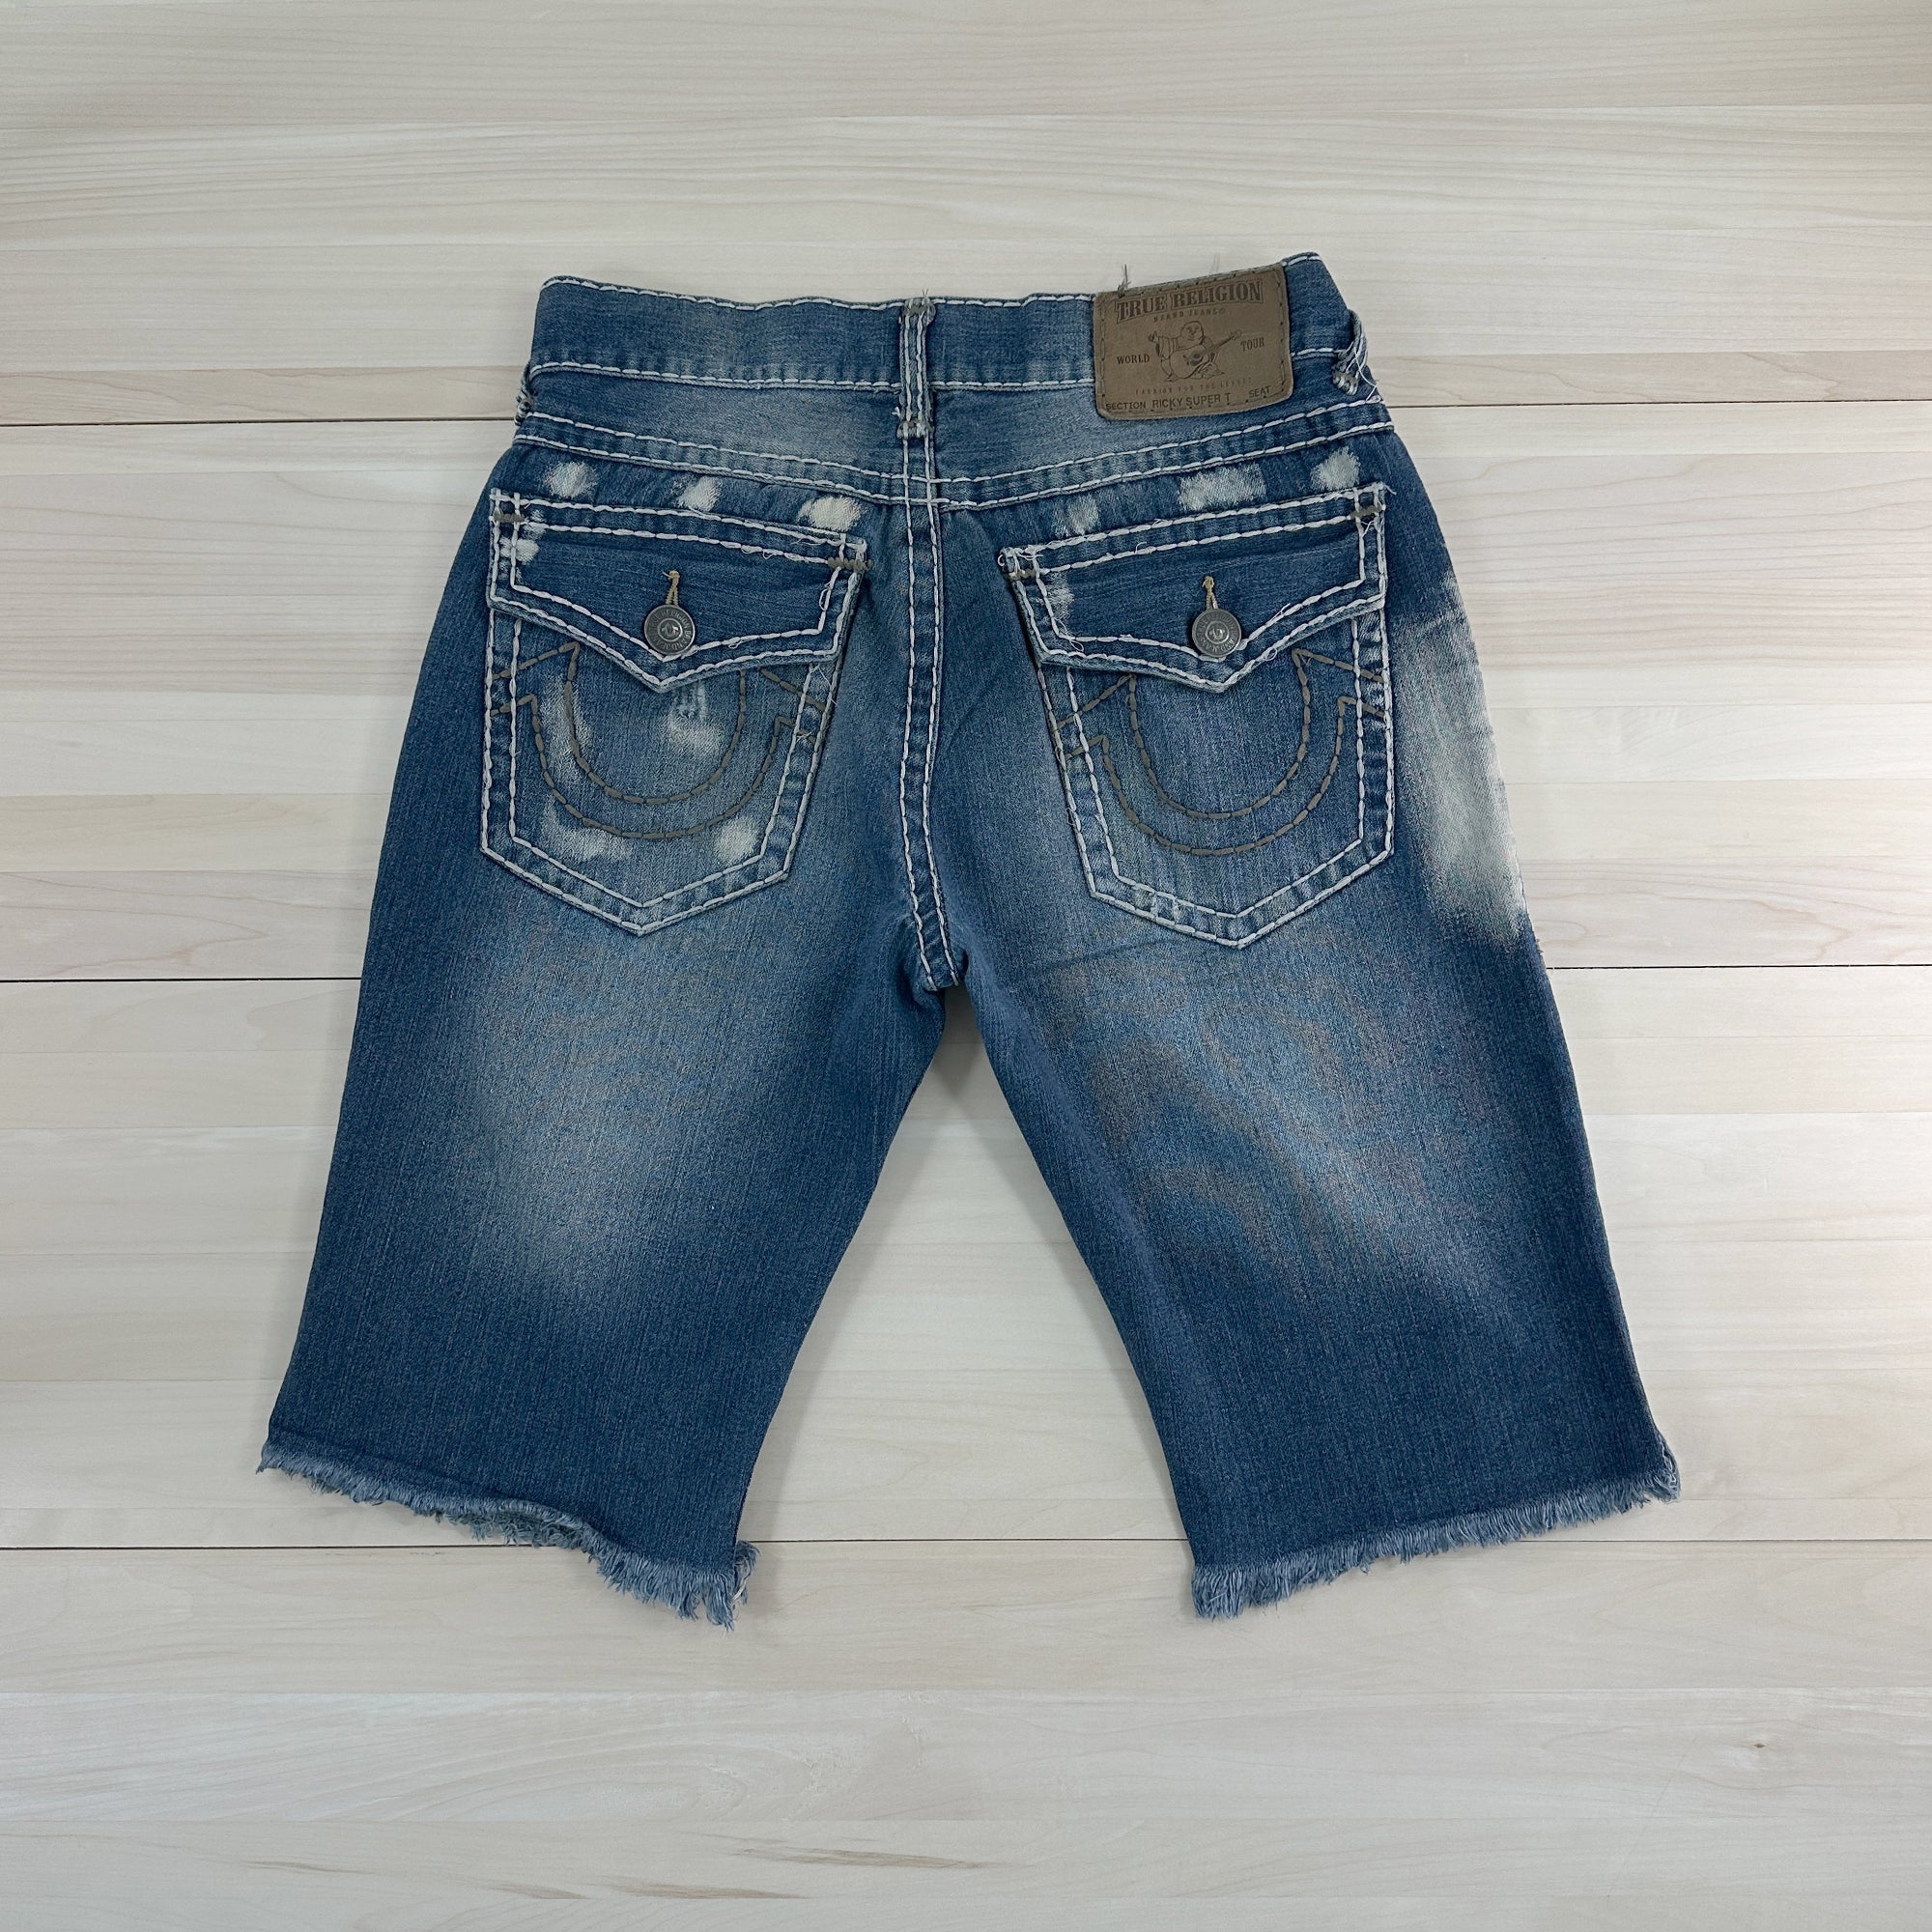 Men's Vintage Blue True Religion Ricky Relaxed Cutoff Shorts - Measures 34x14-2